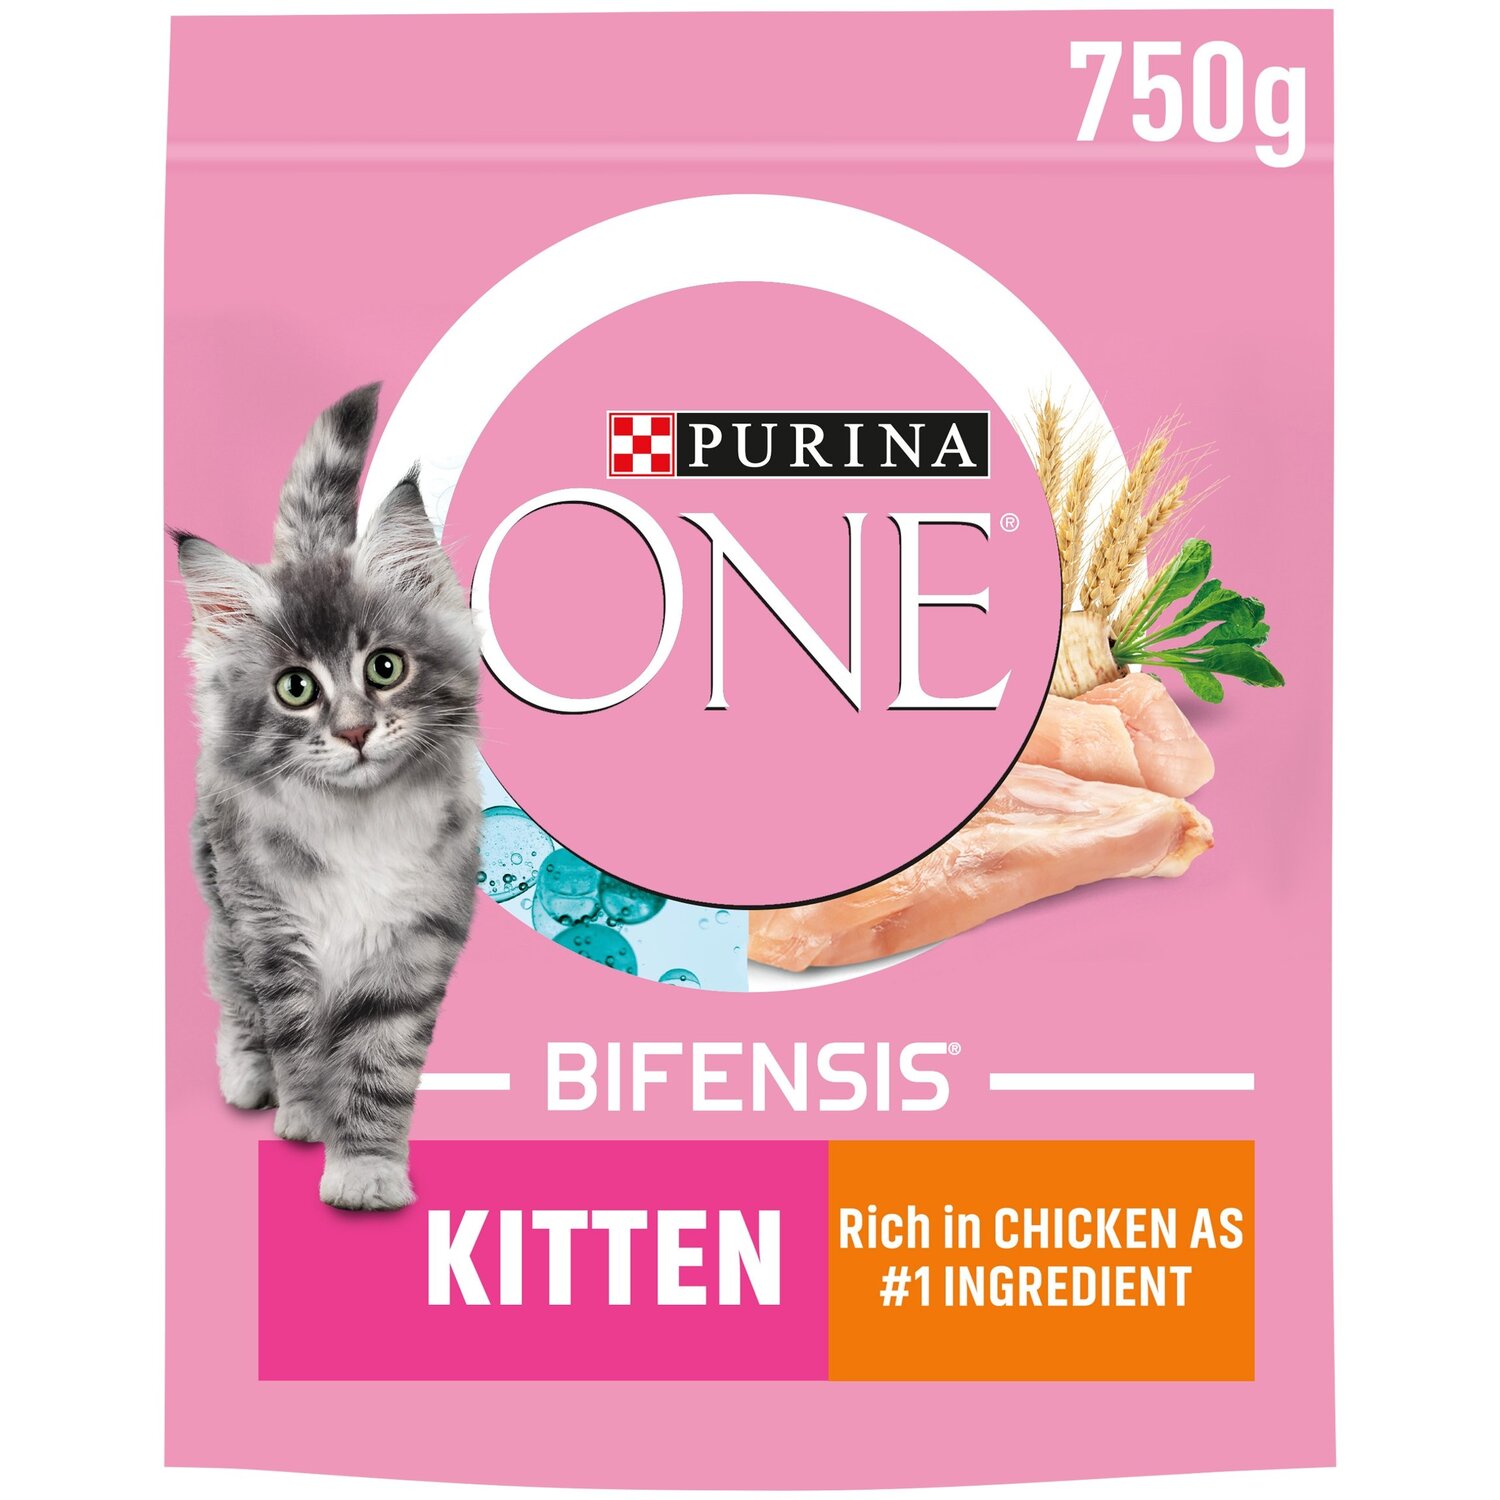 Purina One Chicken and Wholegrain Kitten Dry Cat Food 750g Image 1